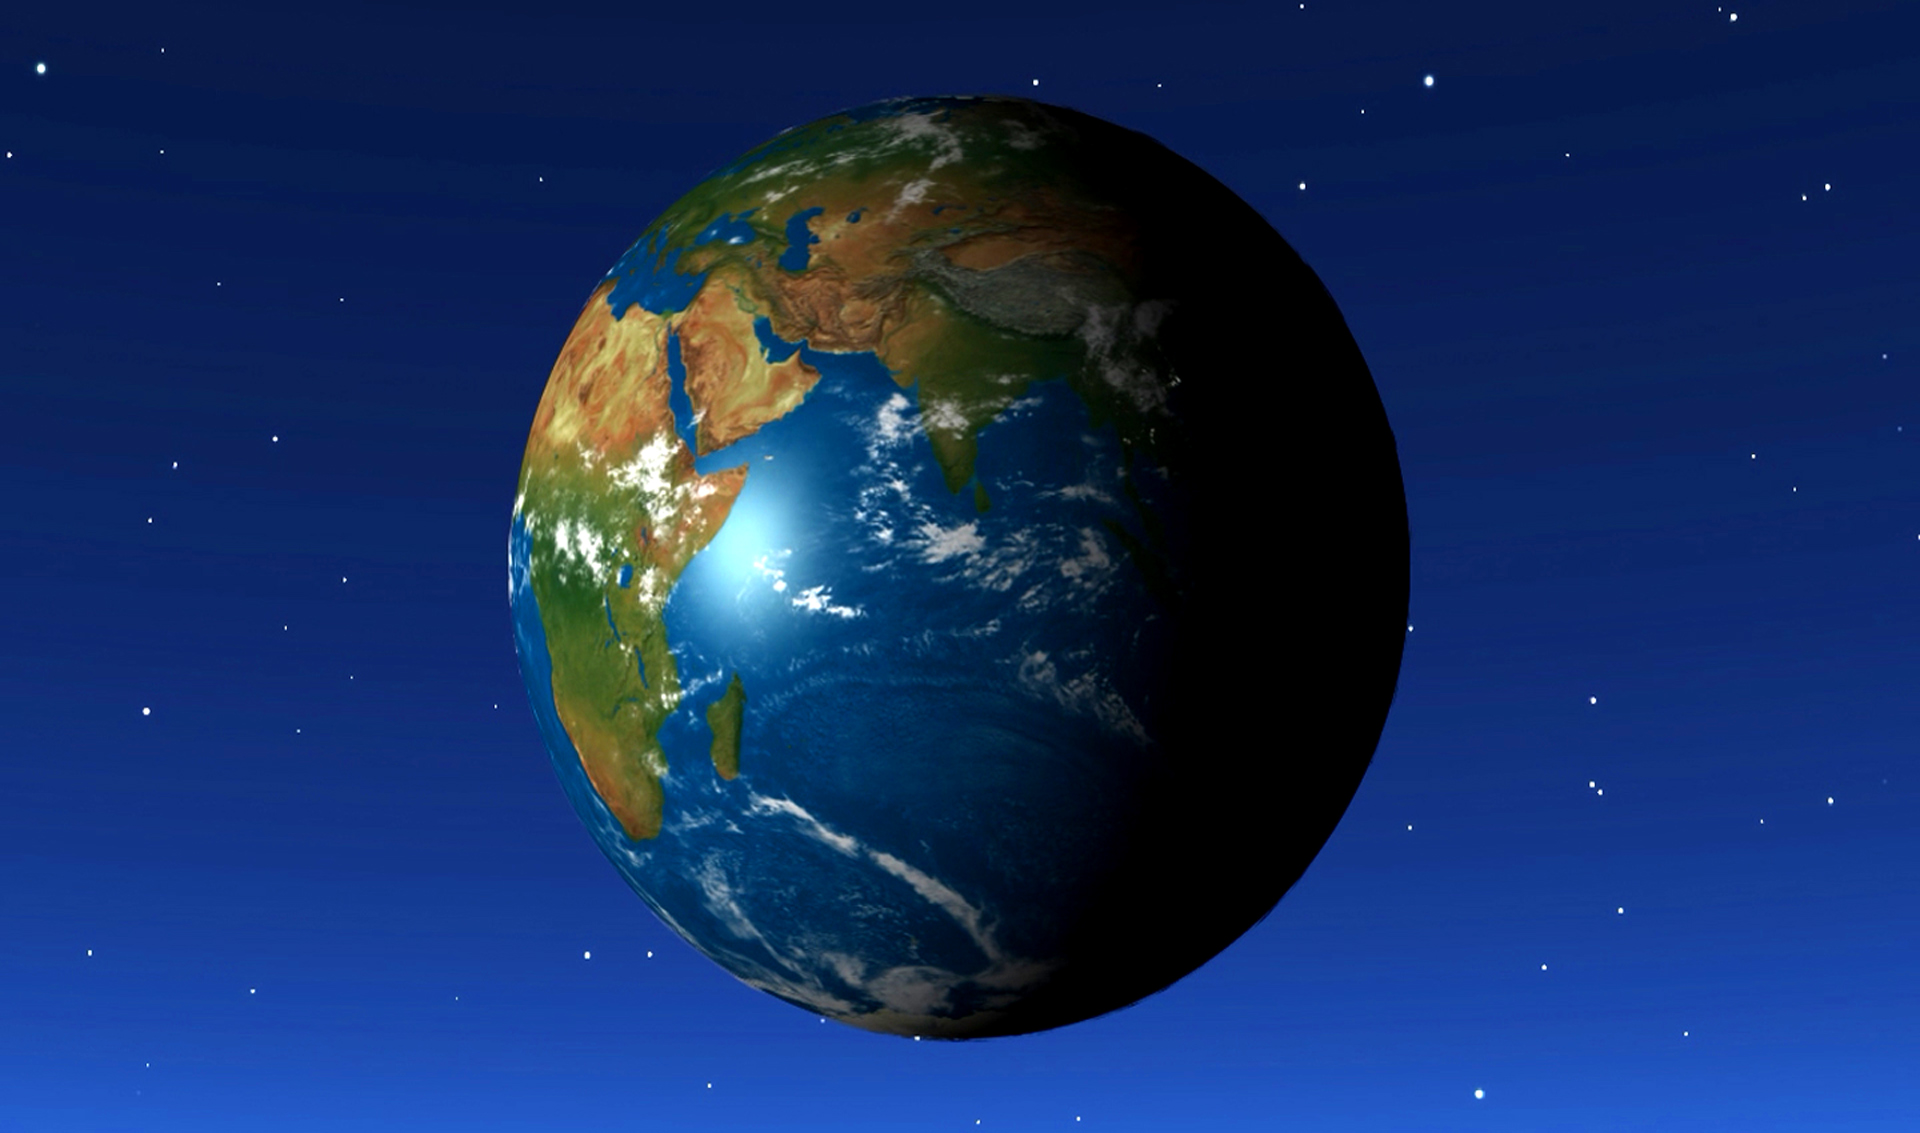 terra live wallpaper,pianeta,terra,oggetto astronomico,atmosfera,mondo